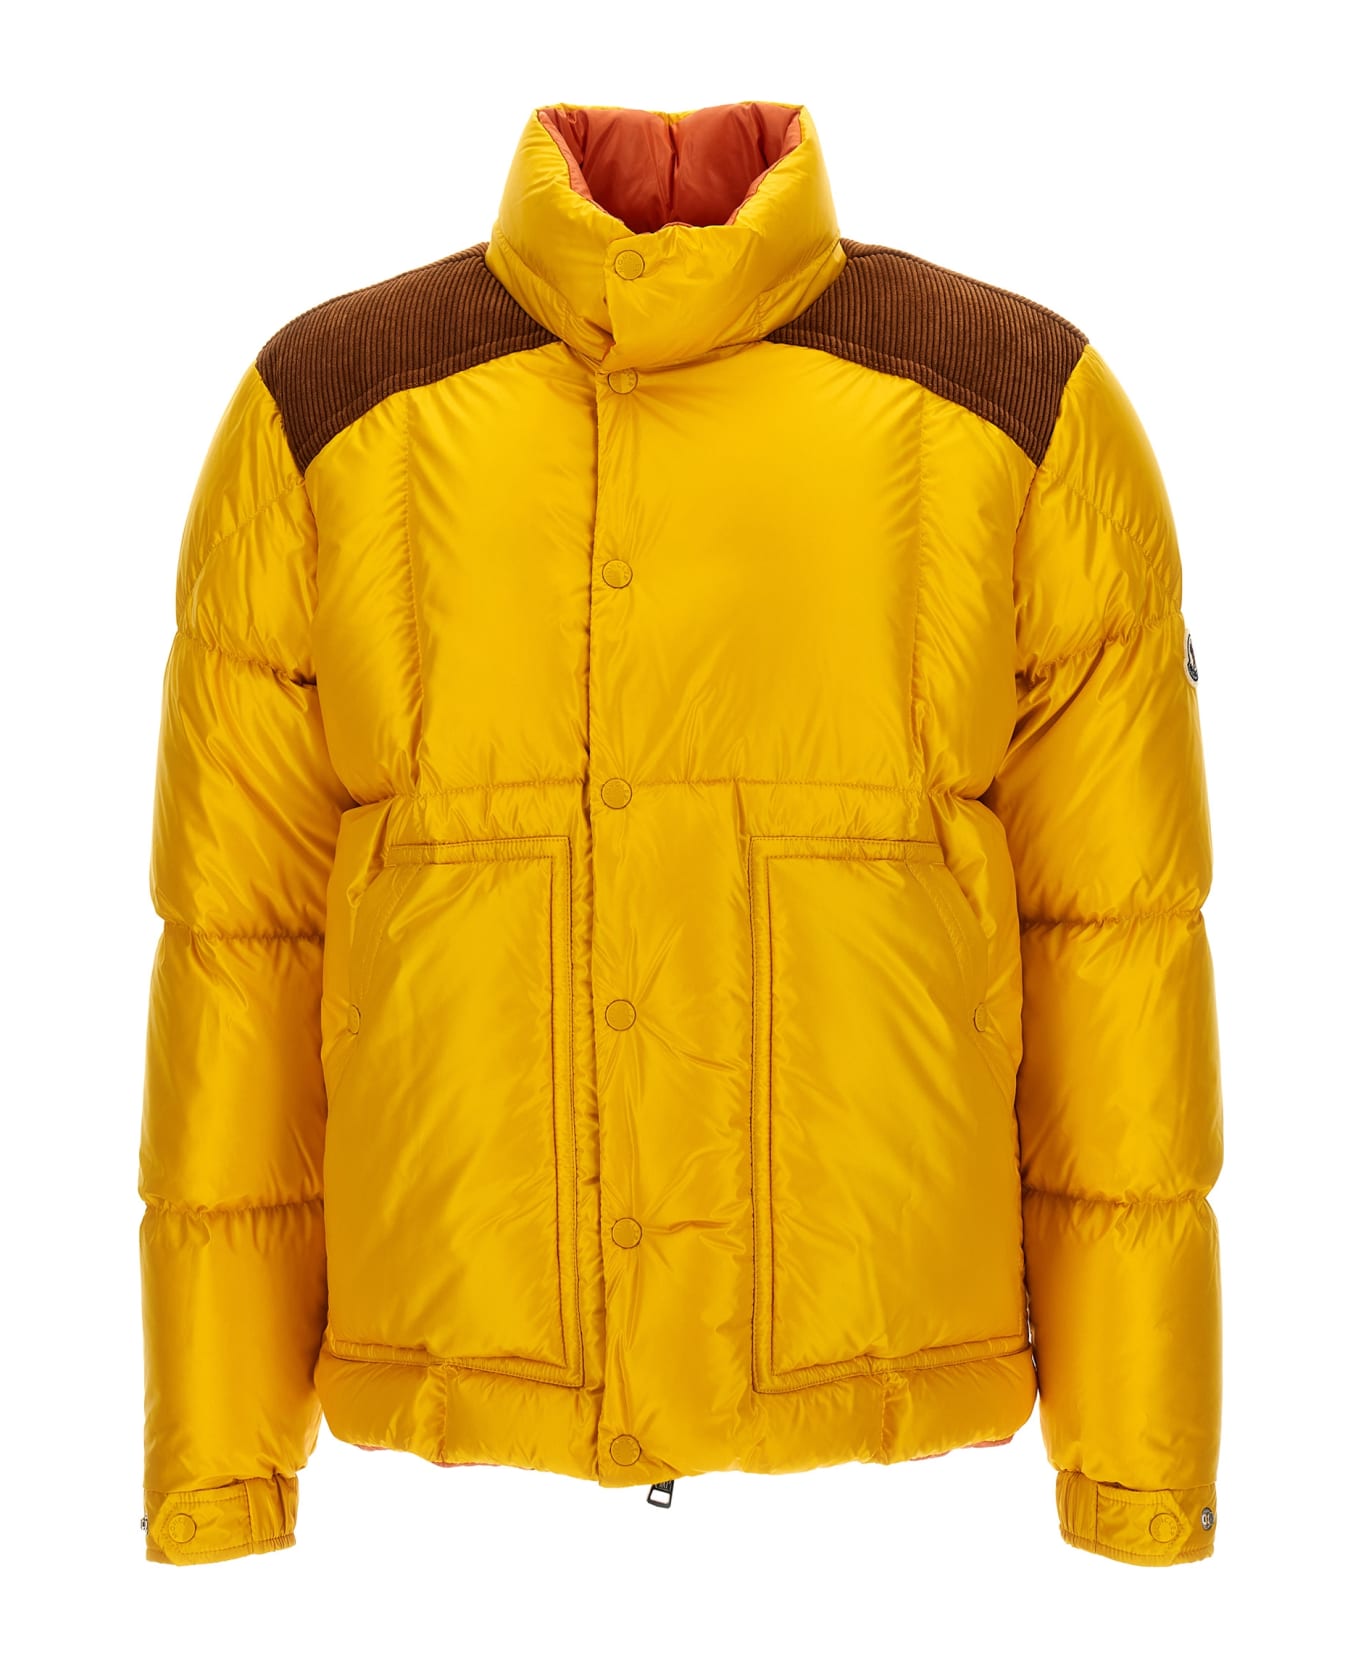 Moncler 'ain' Down Jacket - Yellow & Orange ダウンジャケット